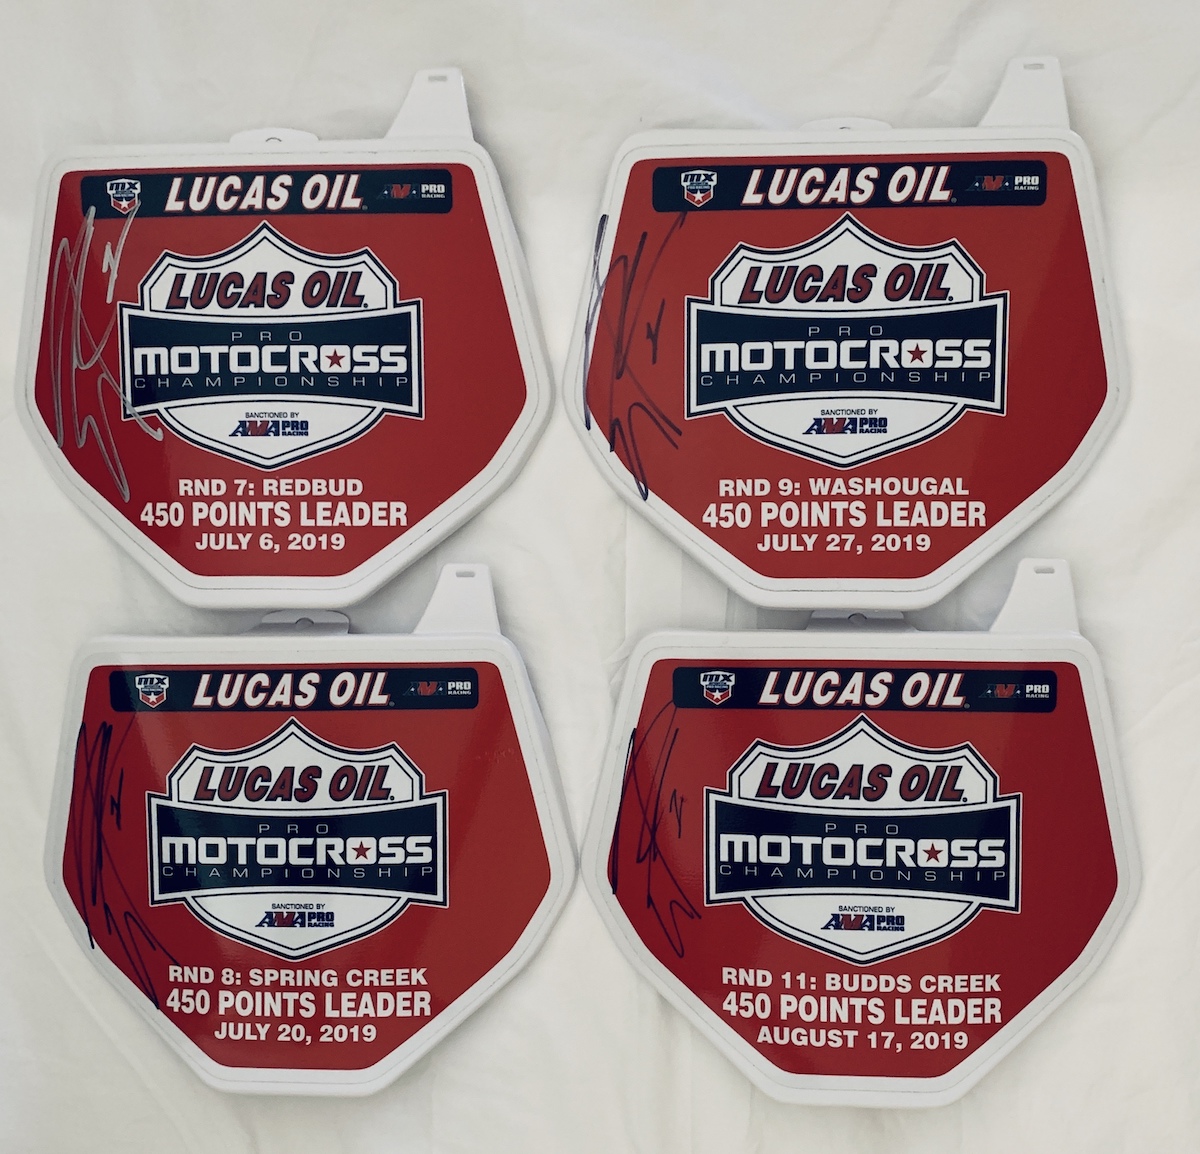 Road 2 Recovery Hosts Motocross Memorabilia Mania eBay Auction Featuring Lucas Oil Pro Motocross Championship [4]